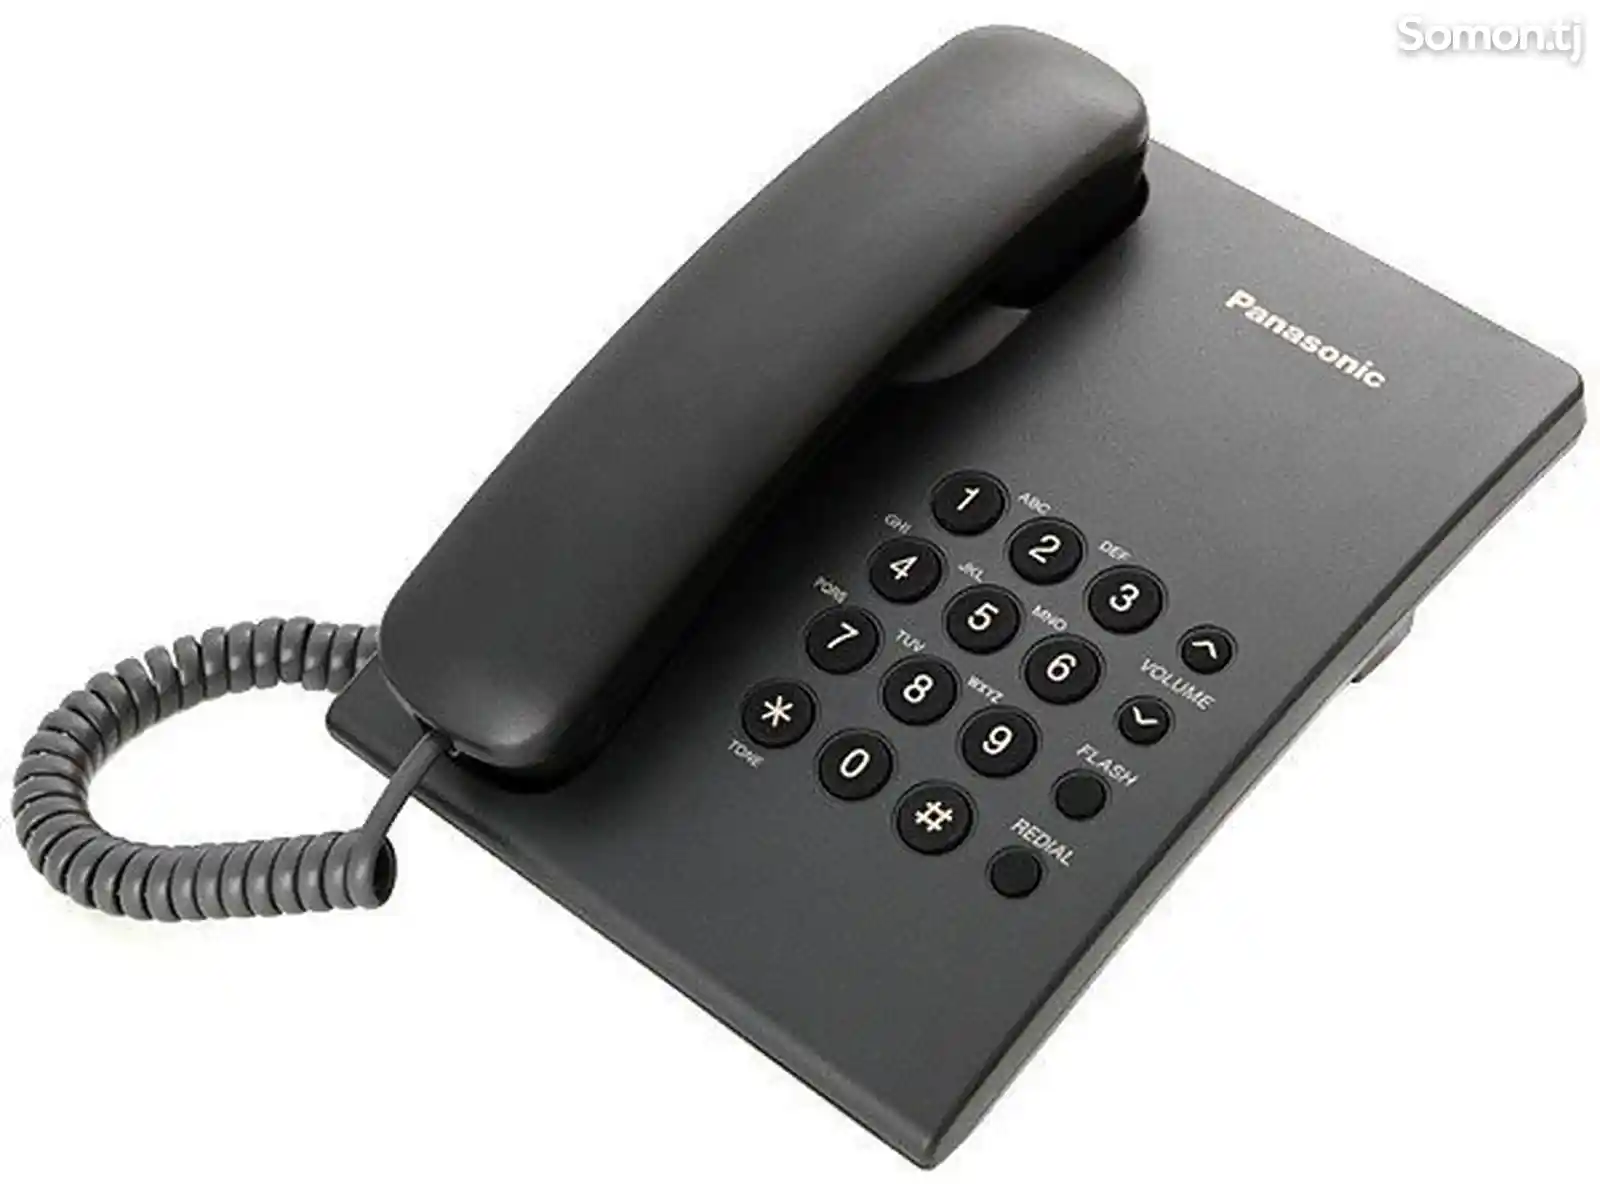 Домашний телефон - Panasonic KX-TS2350UA. Темно-серый цвет